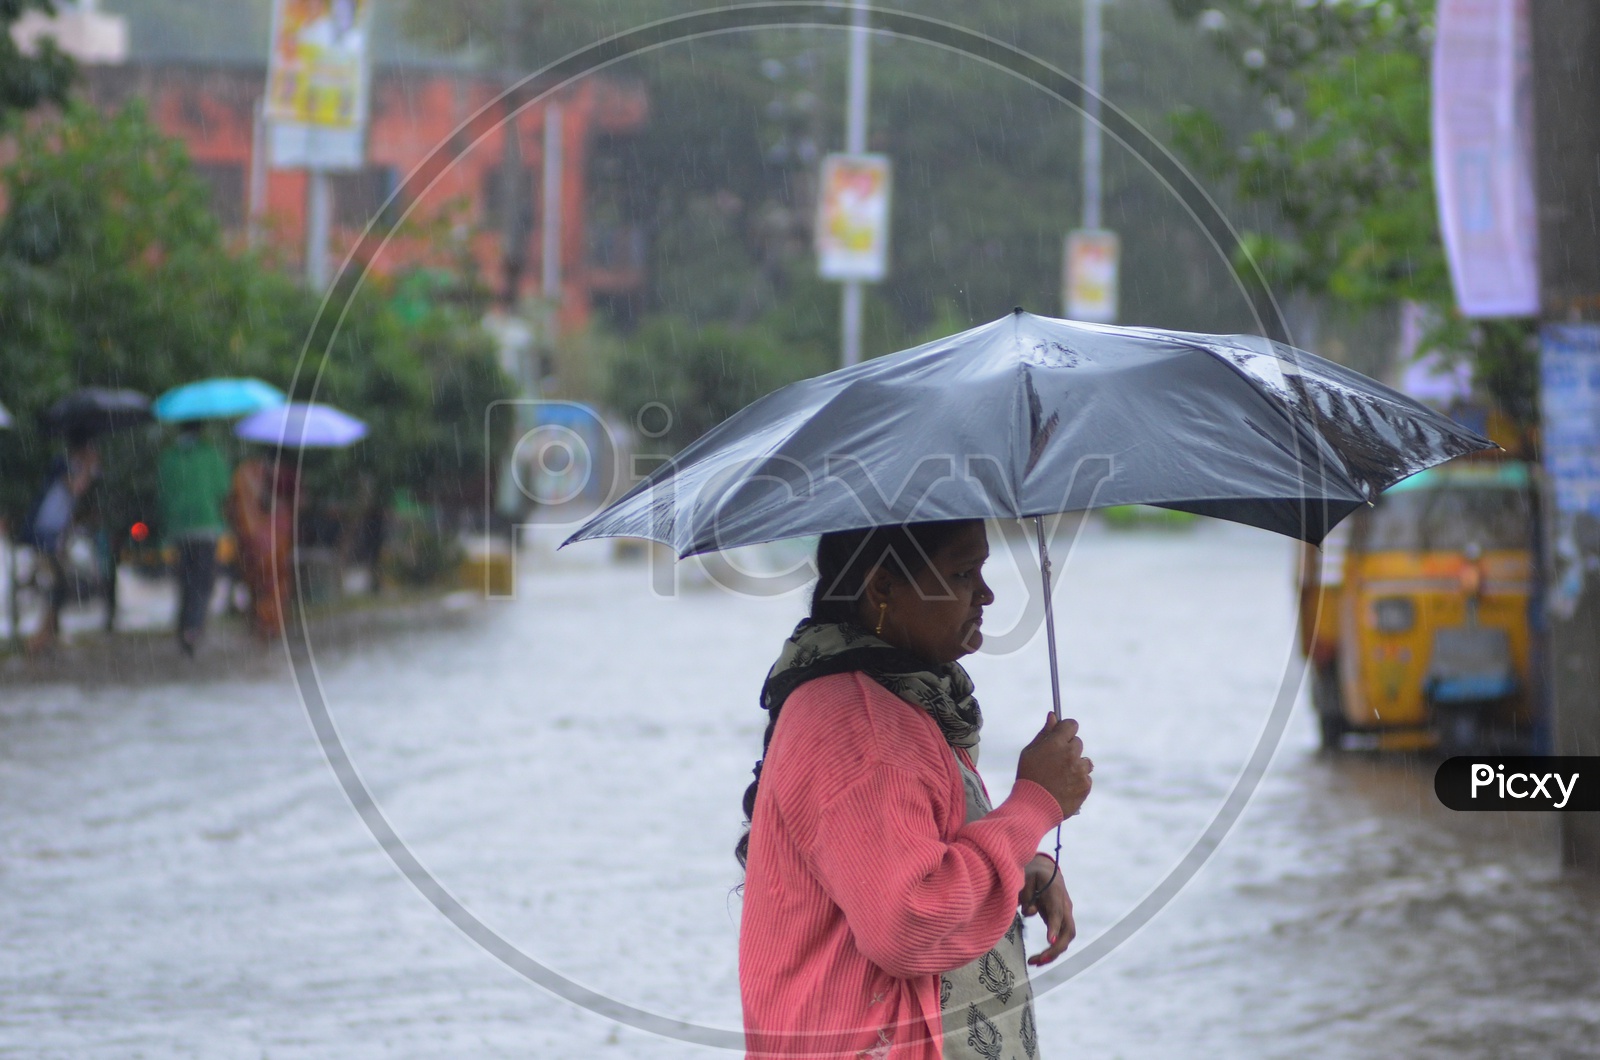 Water logged street, Cyclone Pedhai, Rain